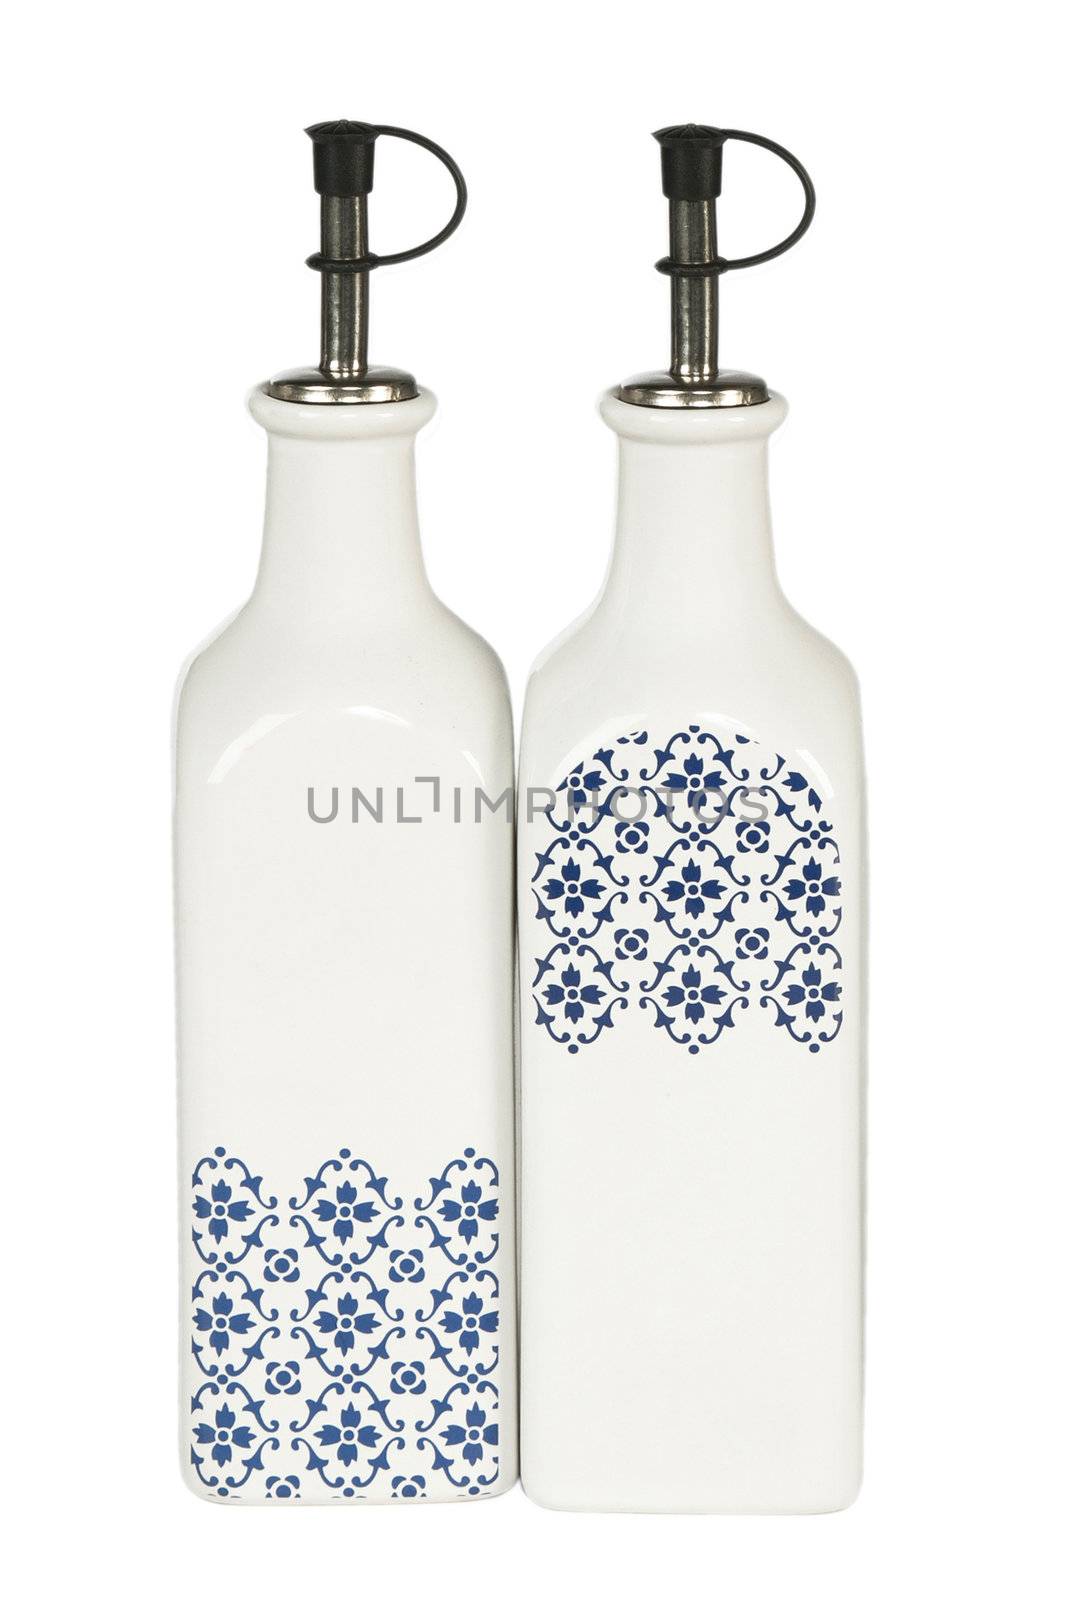 Oil and vinegar bottle isolated on white background